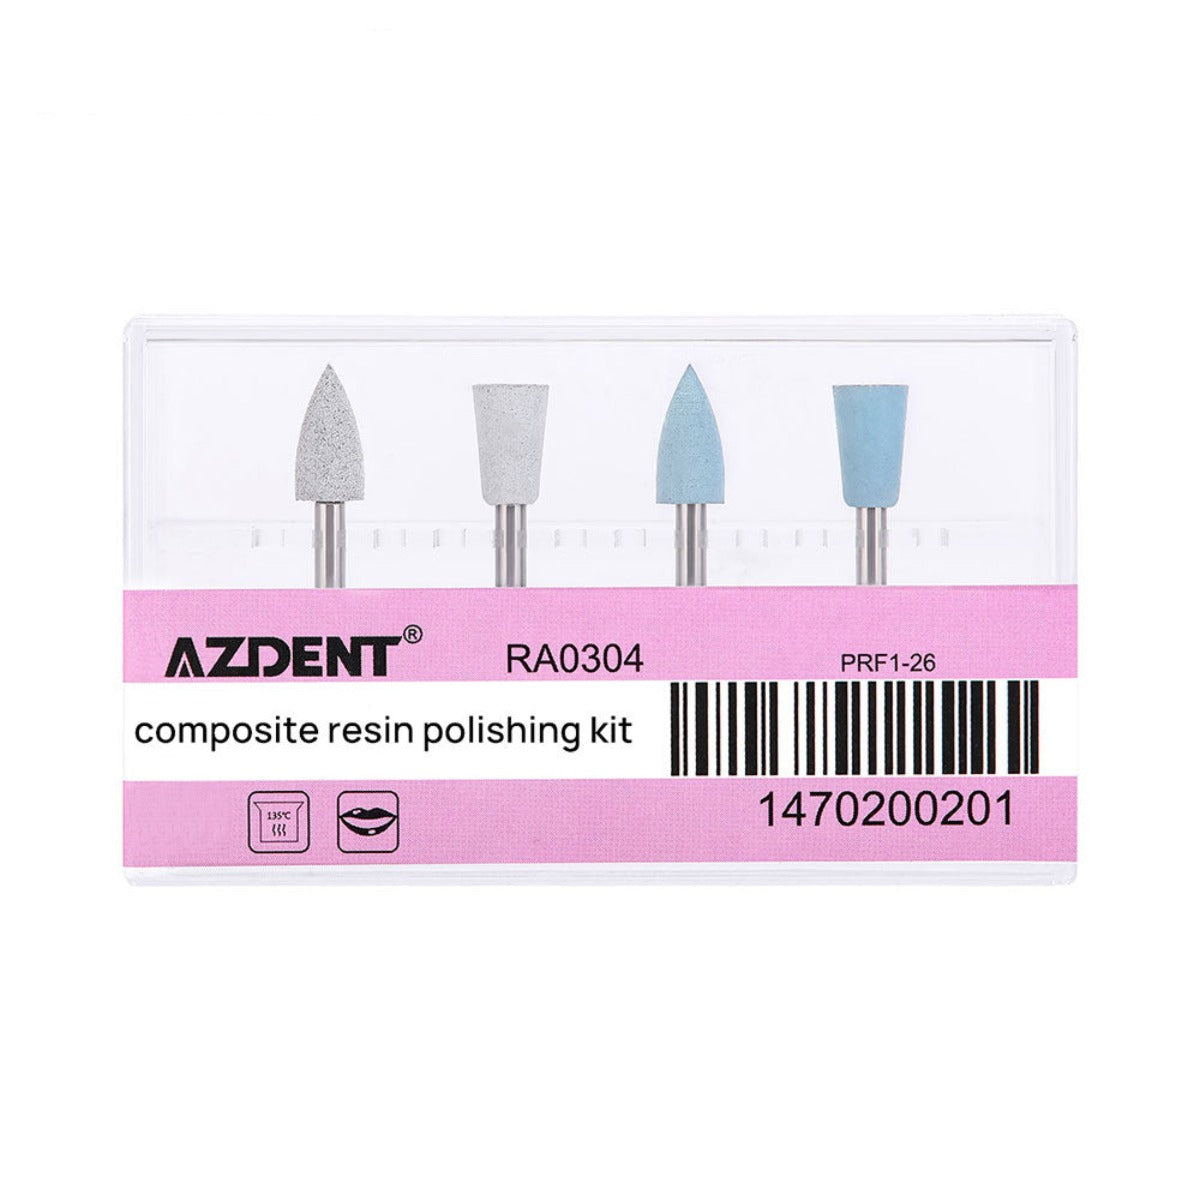 Dental Polishing Kit for Composite Resin RA 0304 4pcs/Box - pairaydental.com